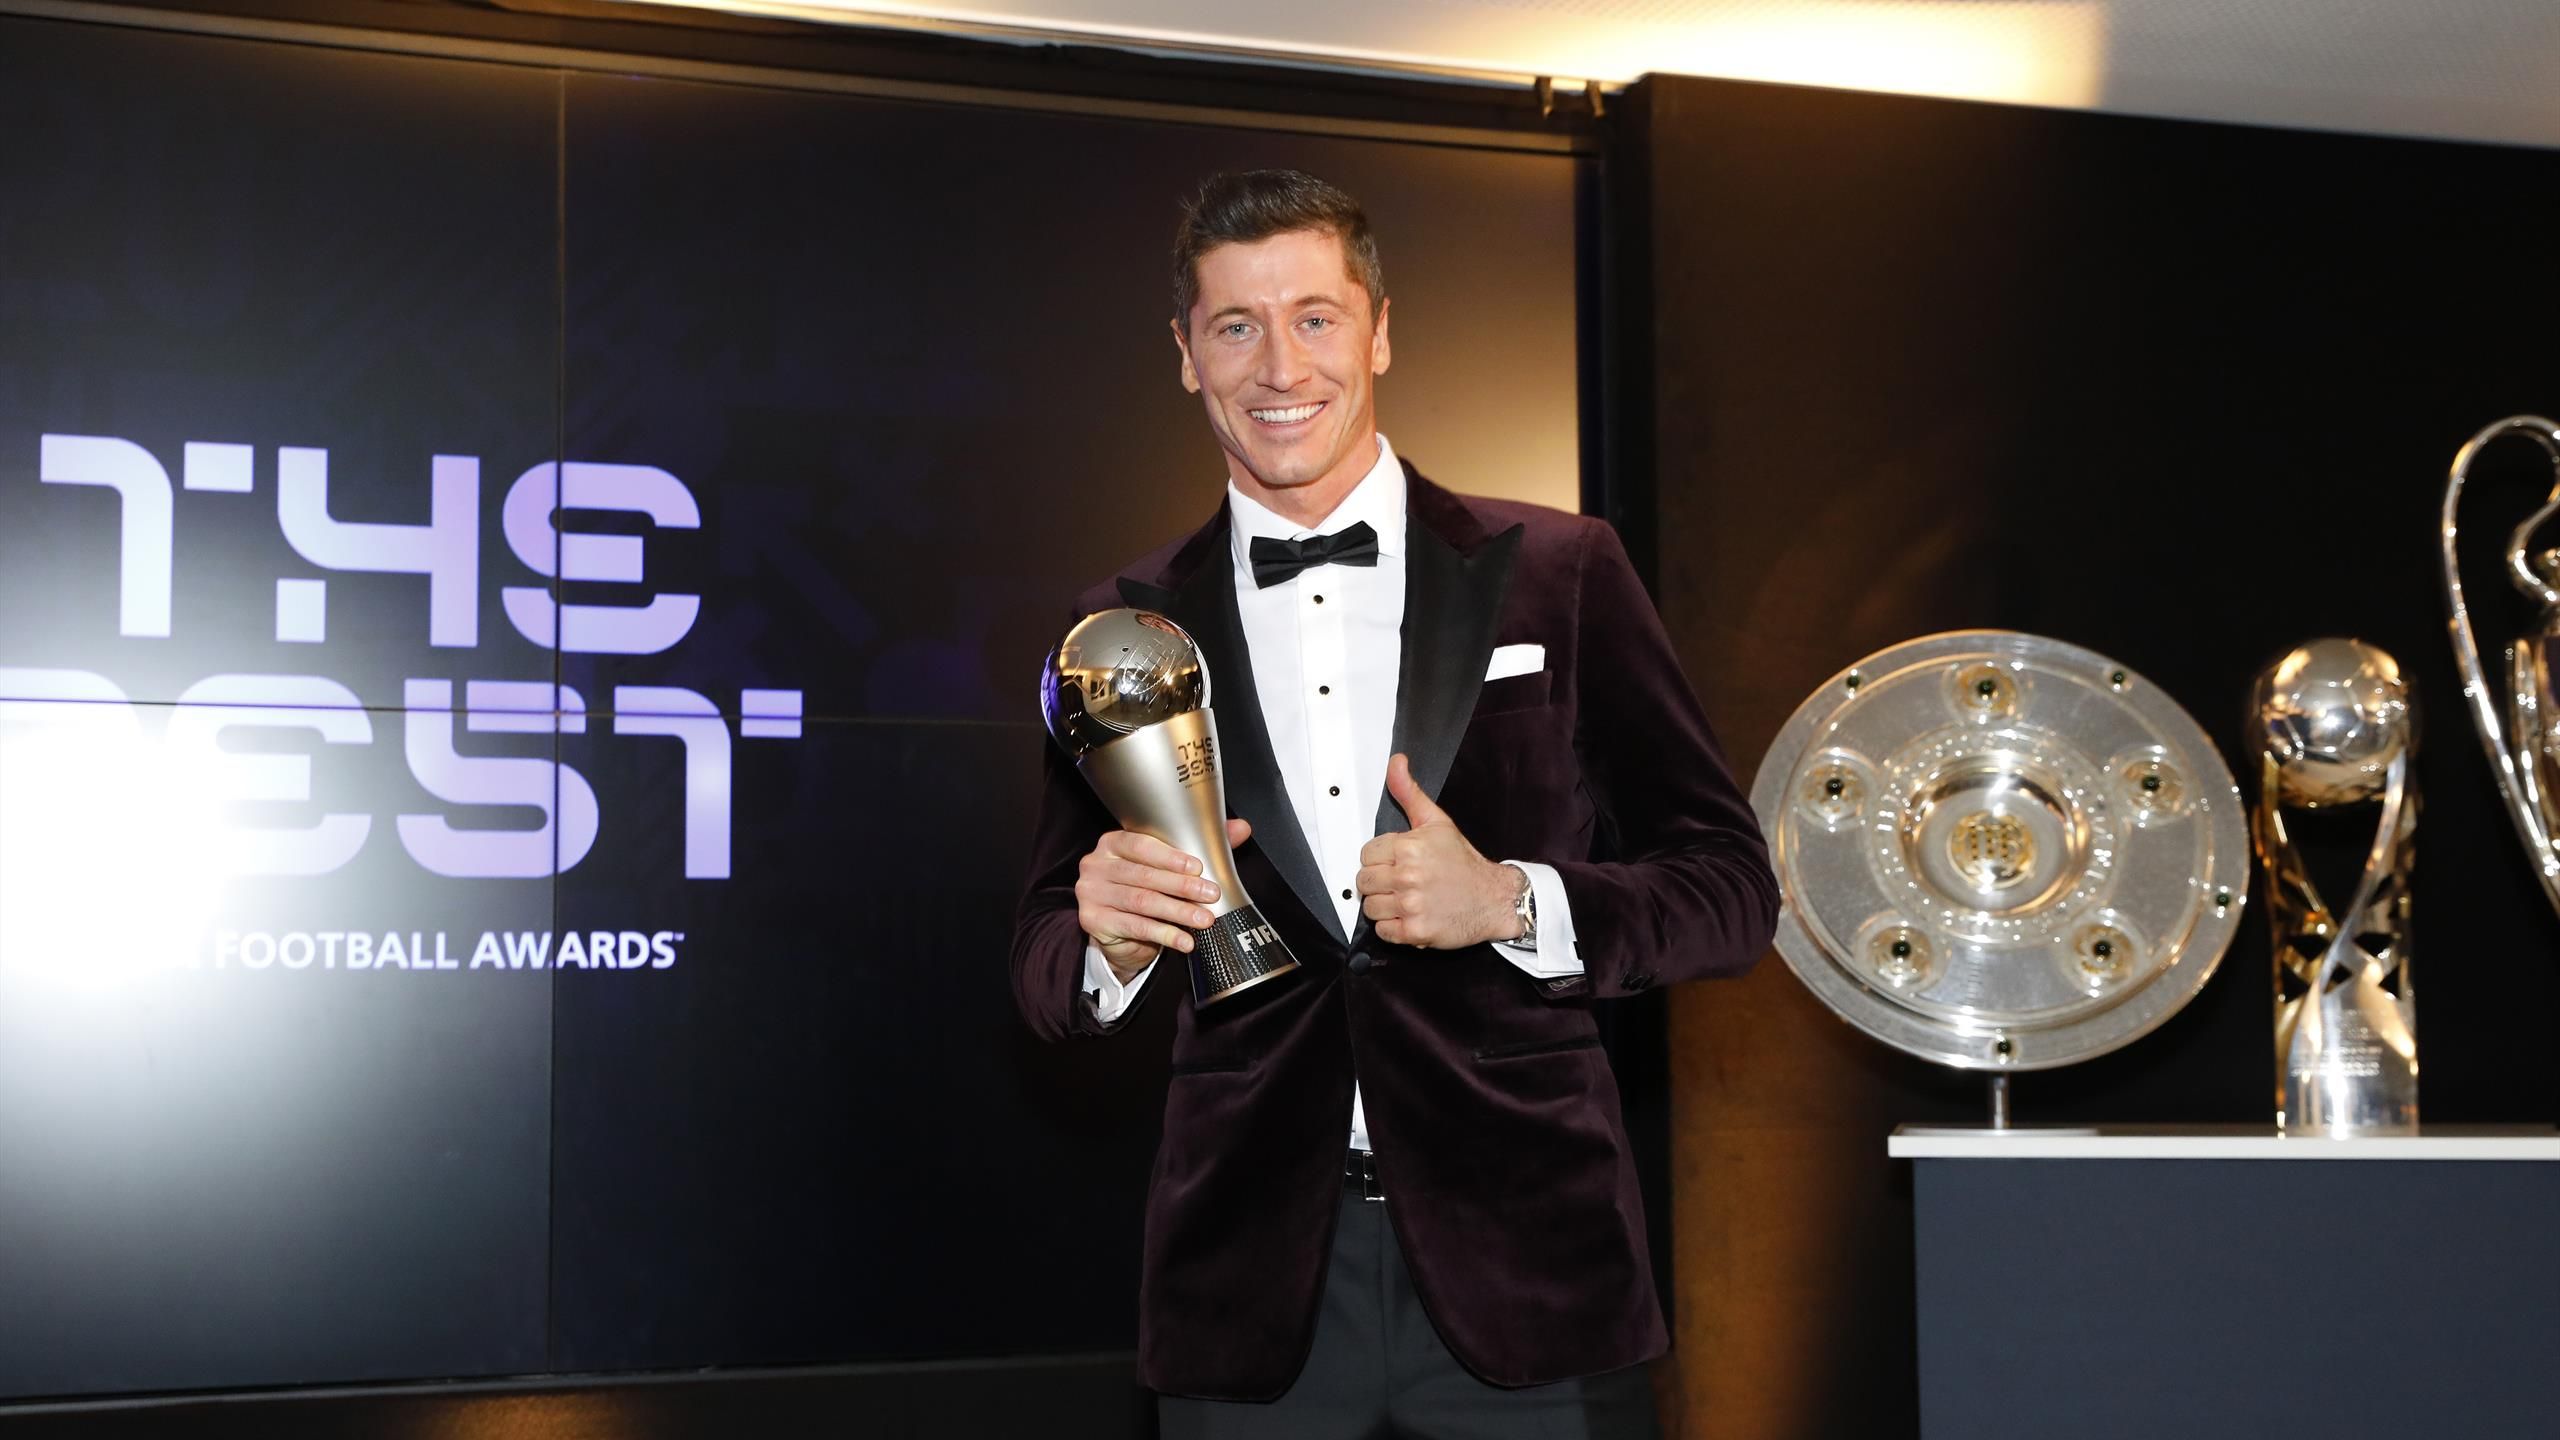 The Best FIFA Football Awards nominees announced Robert Lewandowski, Lionel Messi, Cristiano Ronaldo, Sam Kerr